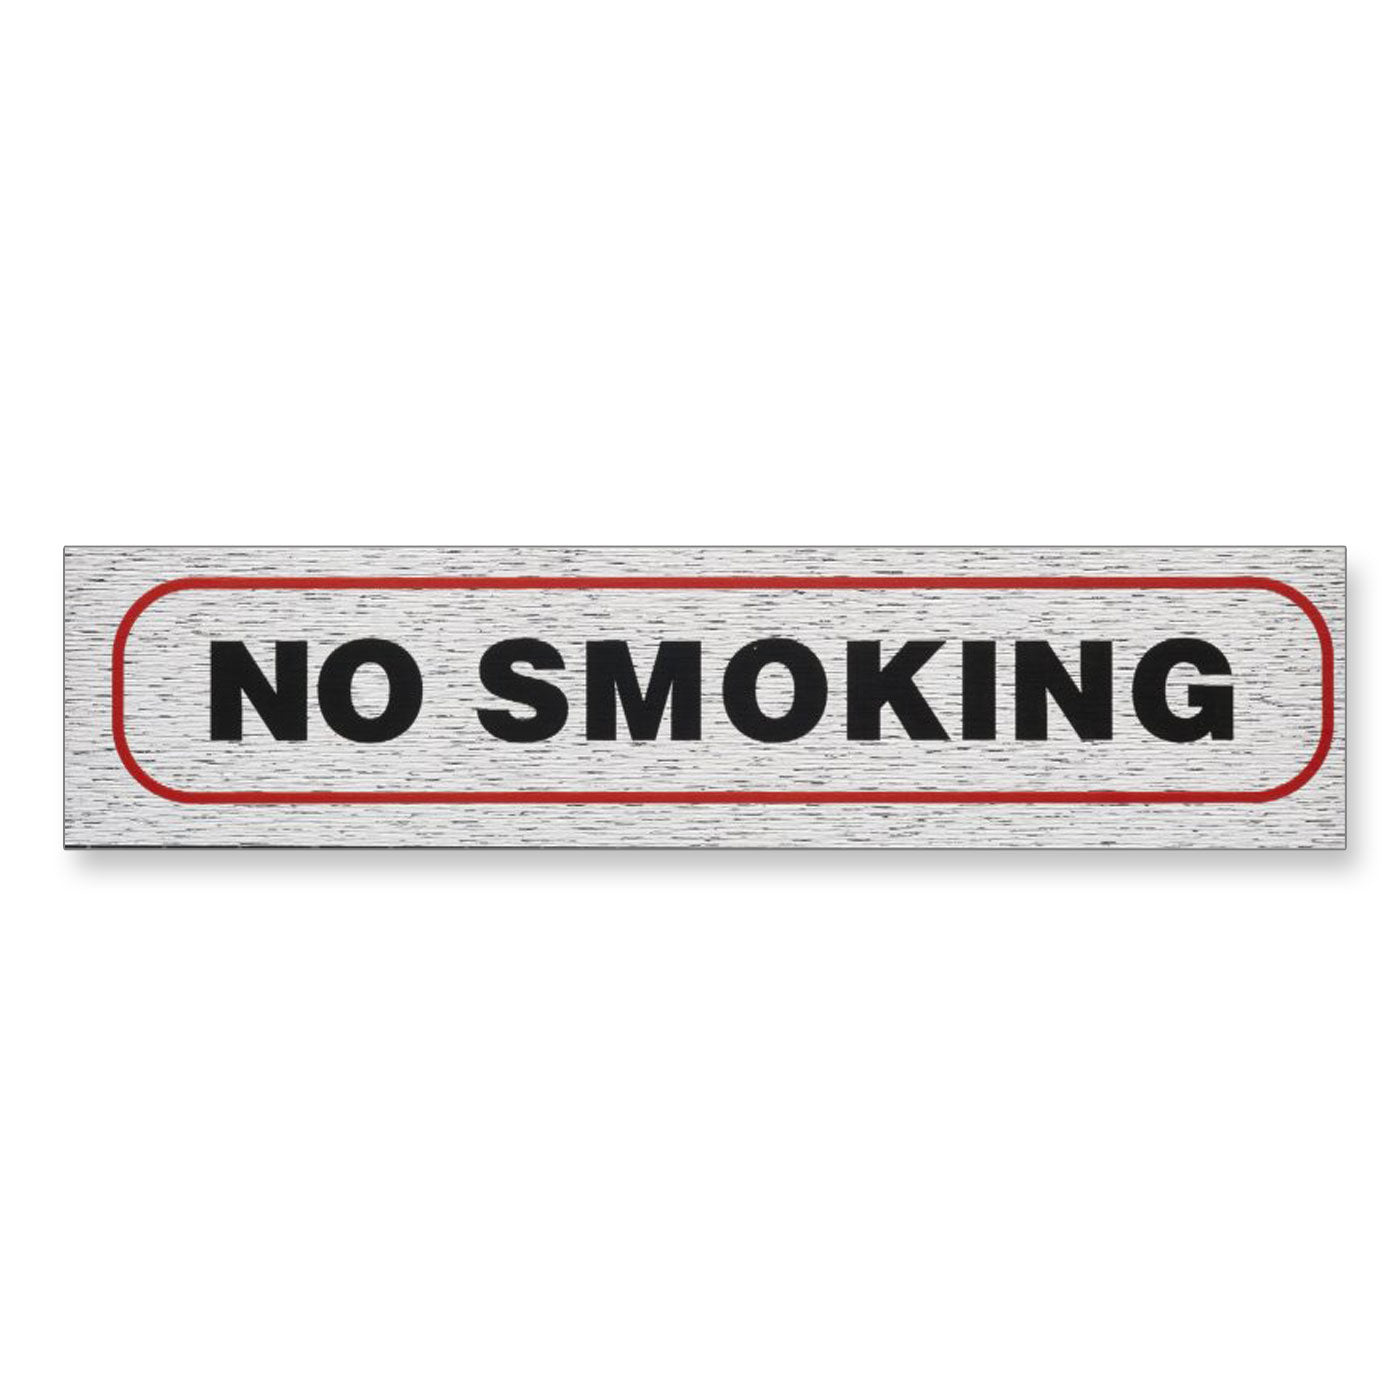 Information Sign "NO SMOKING" 17 x 4 cm [Self-Adhesive]